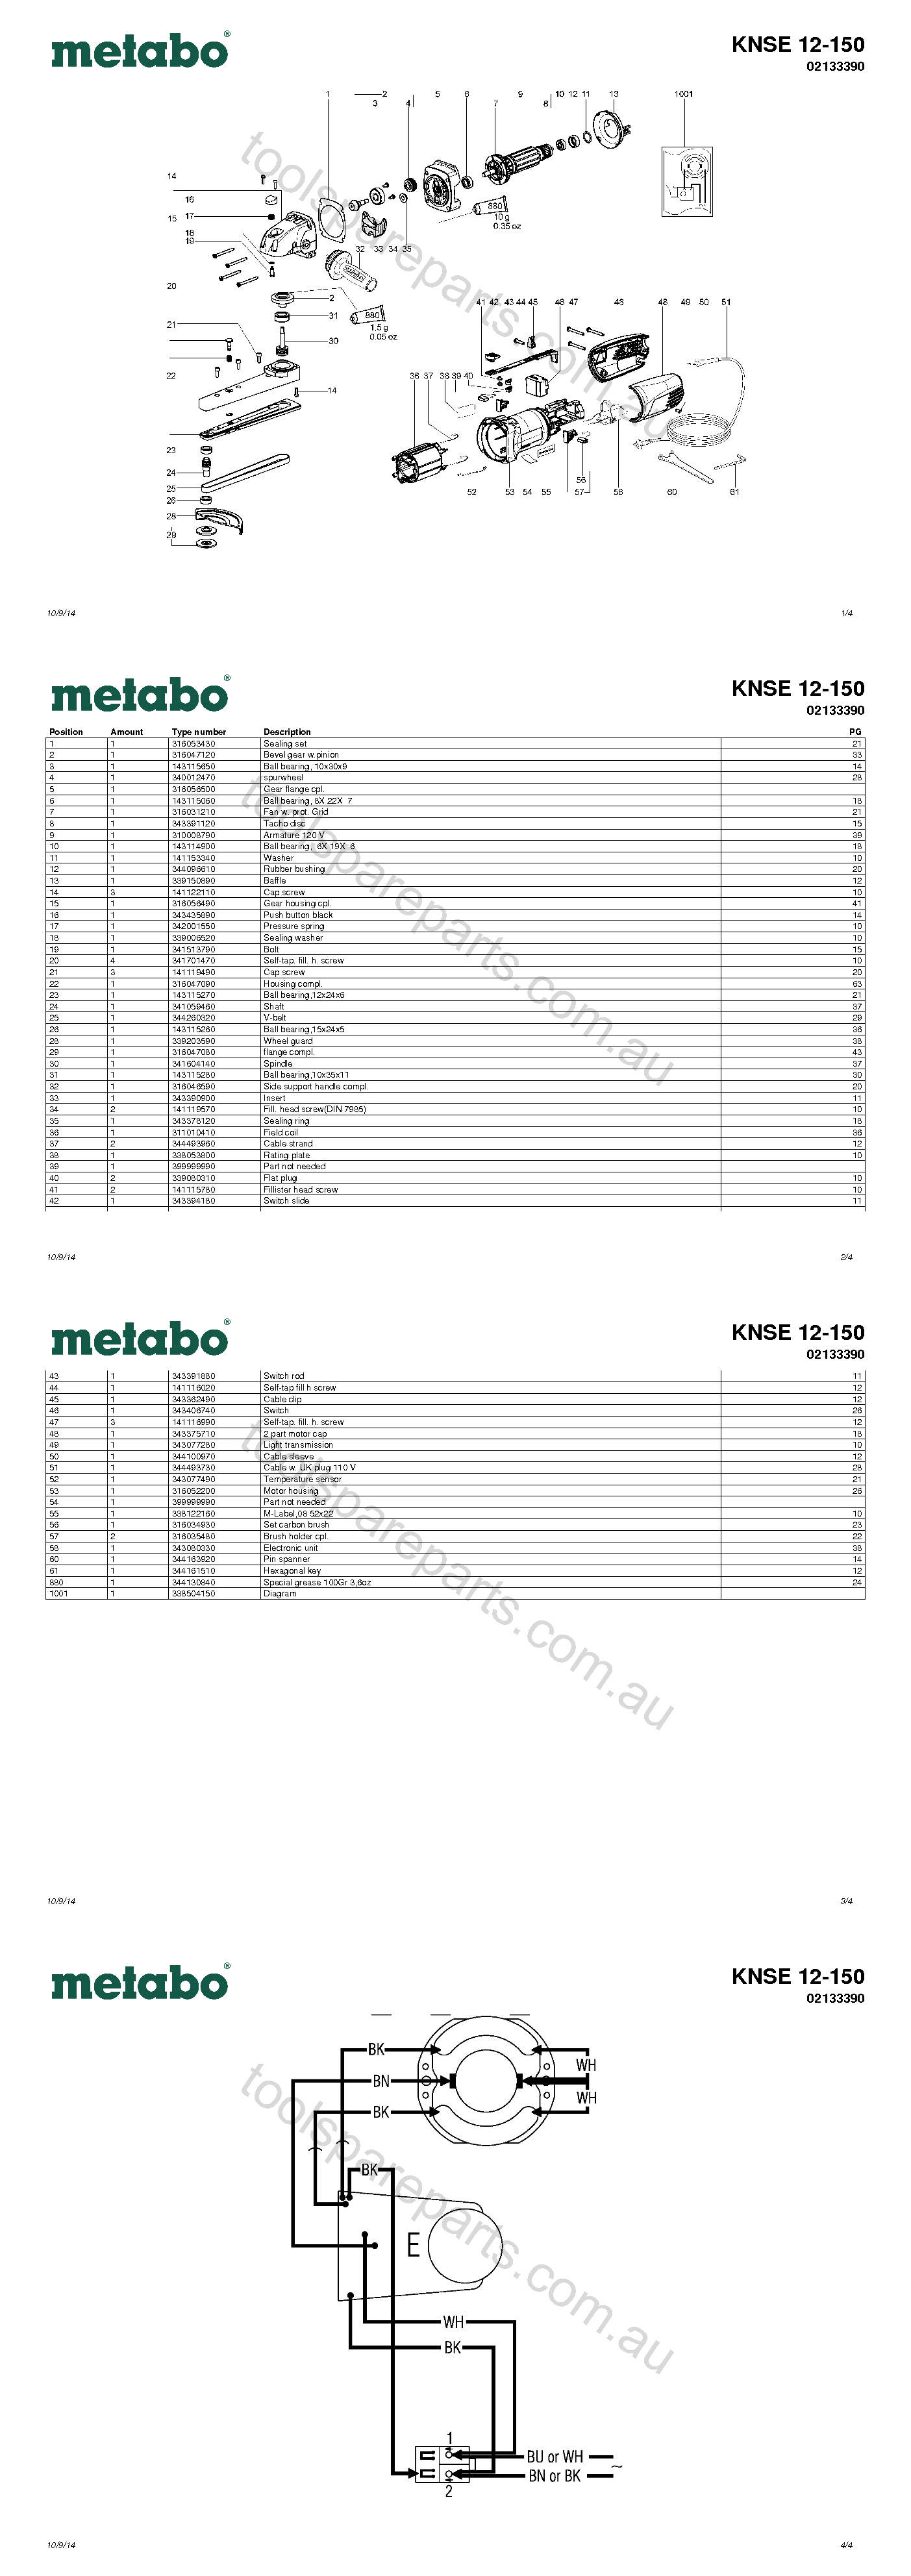 Metabo KNSE 12-150 02133390  Diagram 1